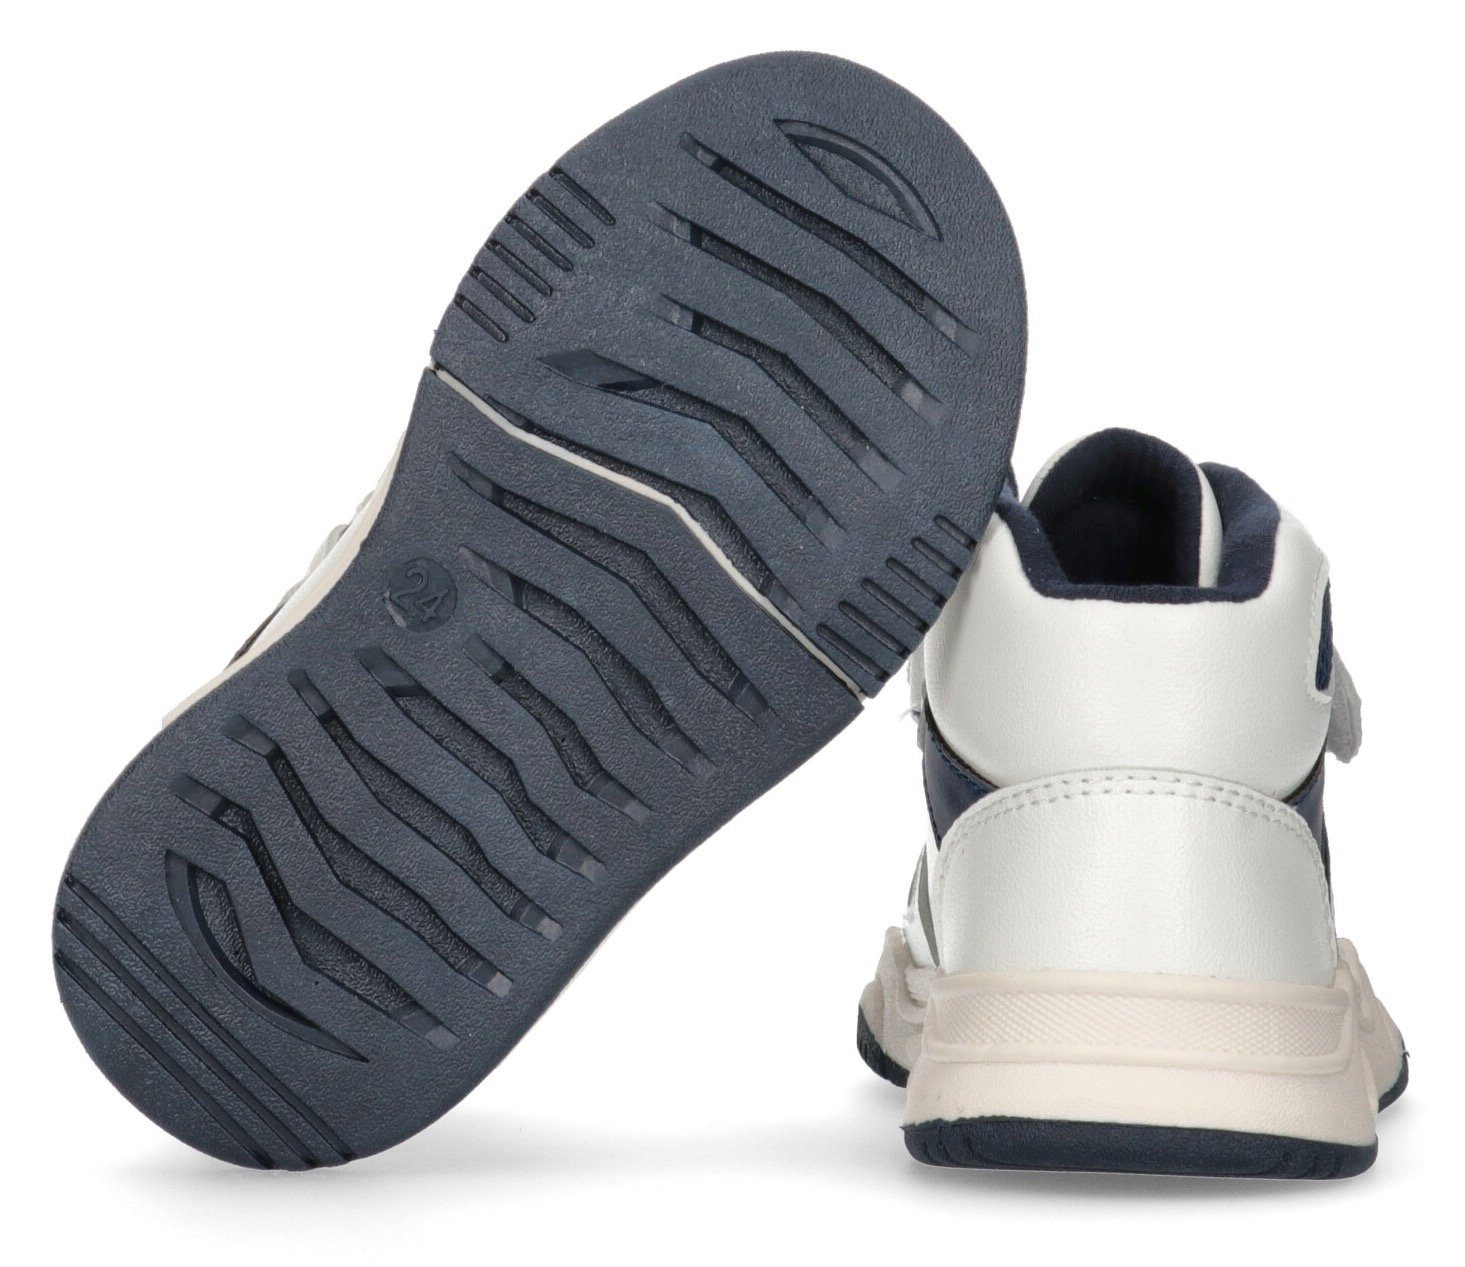 Tommy Hilfiger STRIPES HIGH TOP Sneaker cooler Farbkombi LACE-UP/VELCRO SNEAKER in